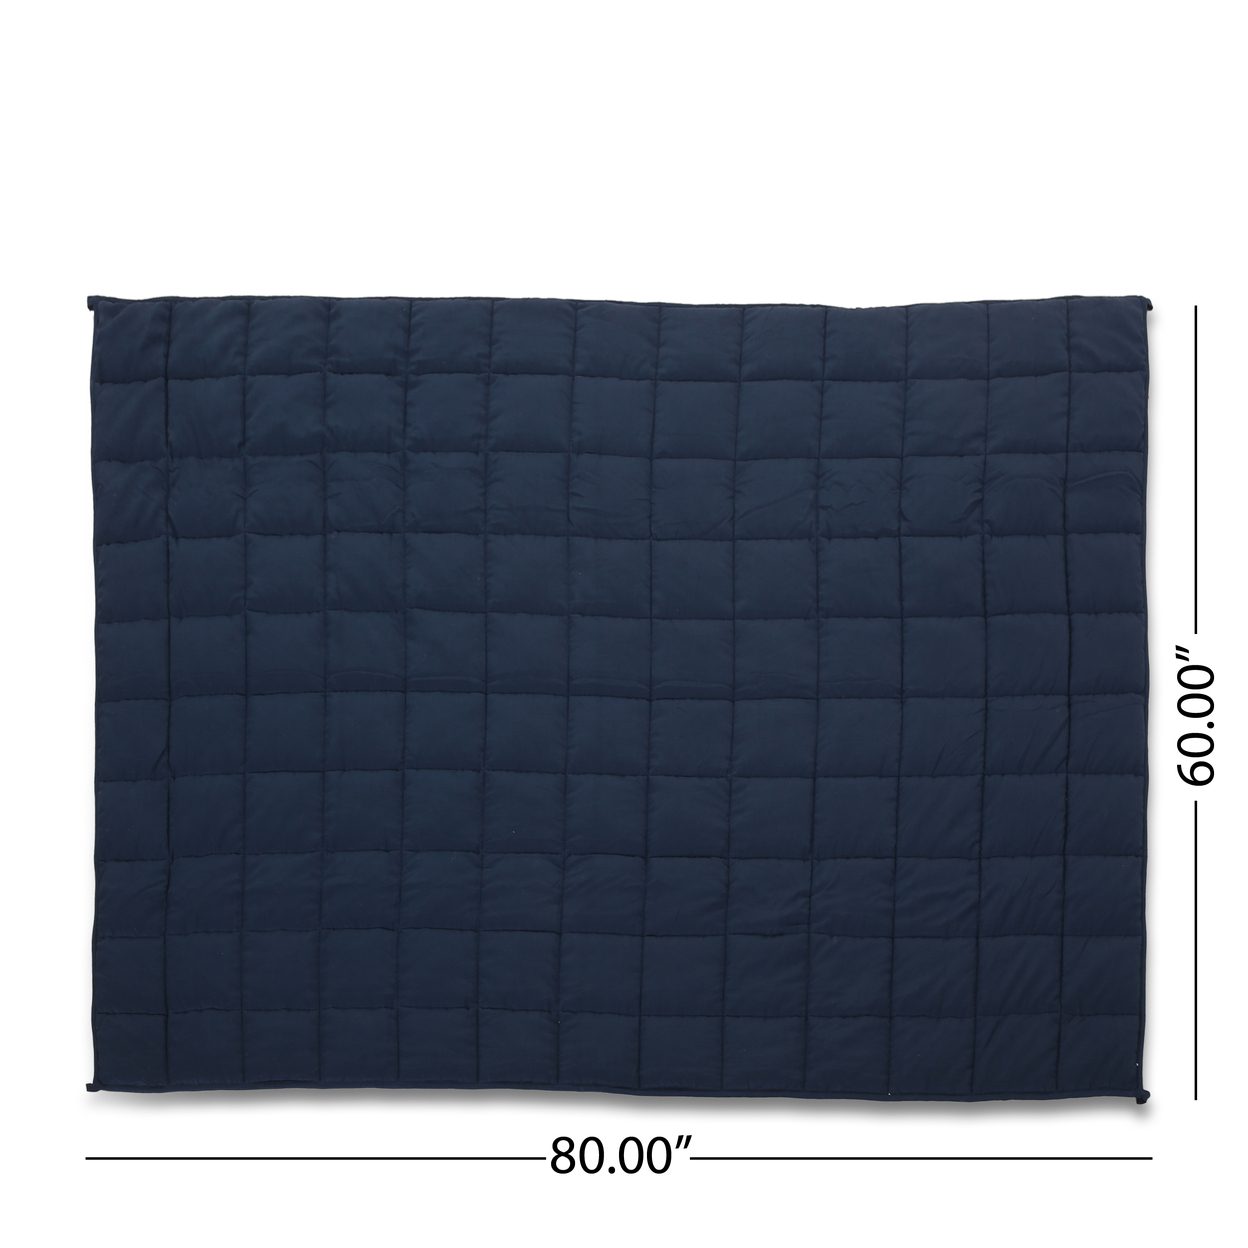 OkiOki Cotton Weighted Blanket - Gray(20 Lbs)